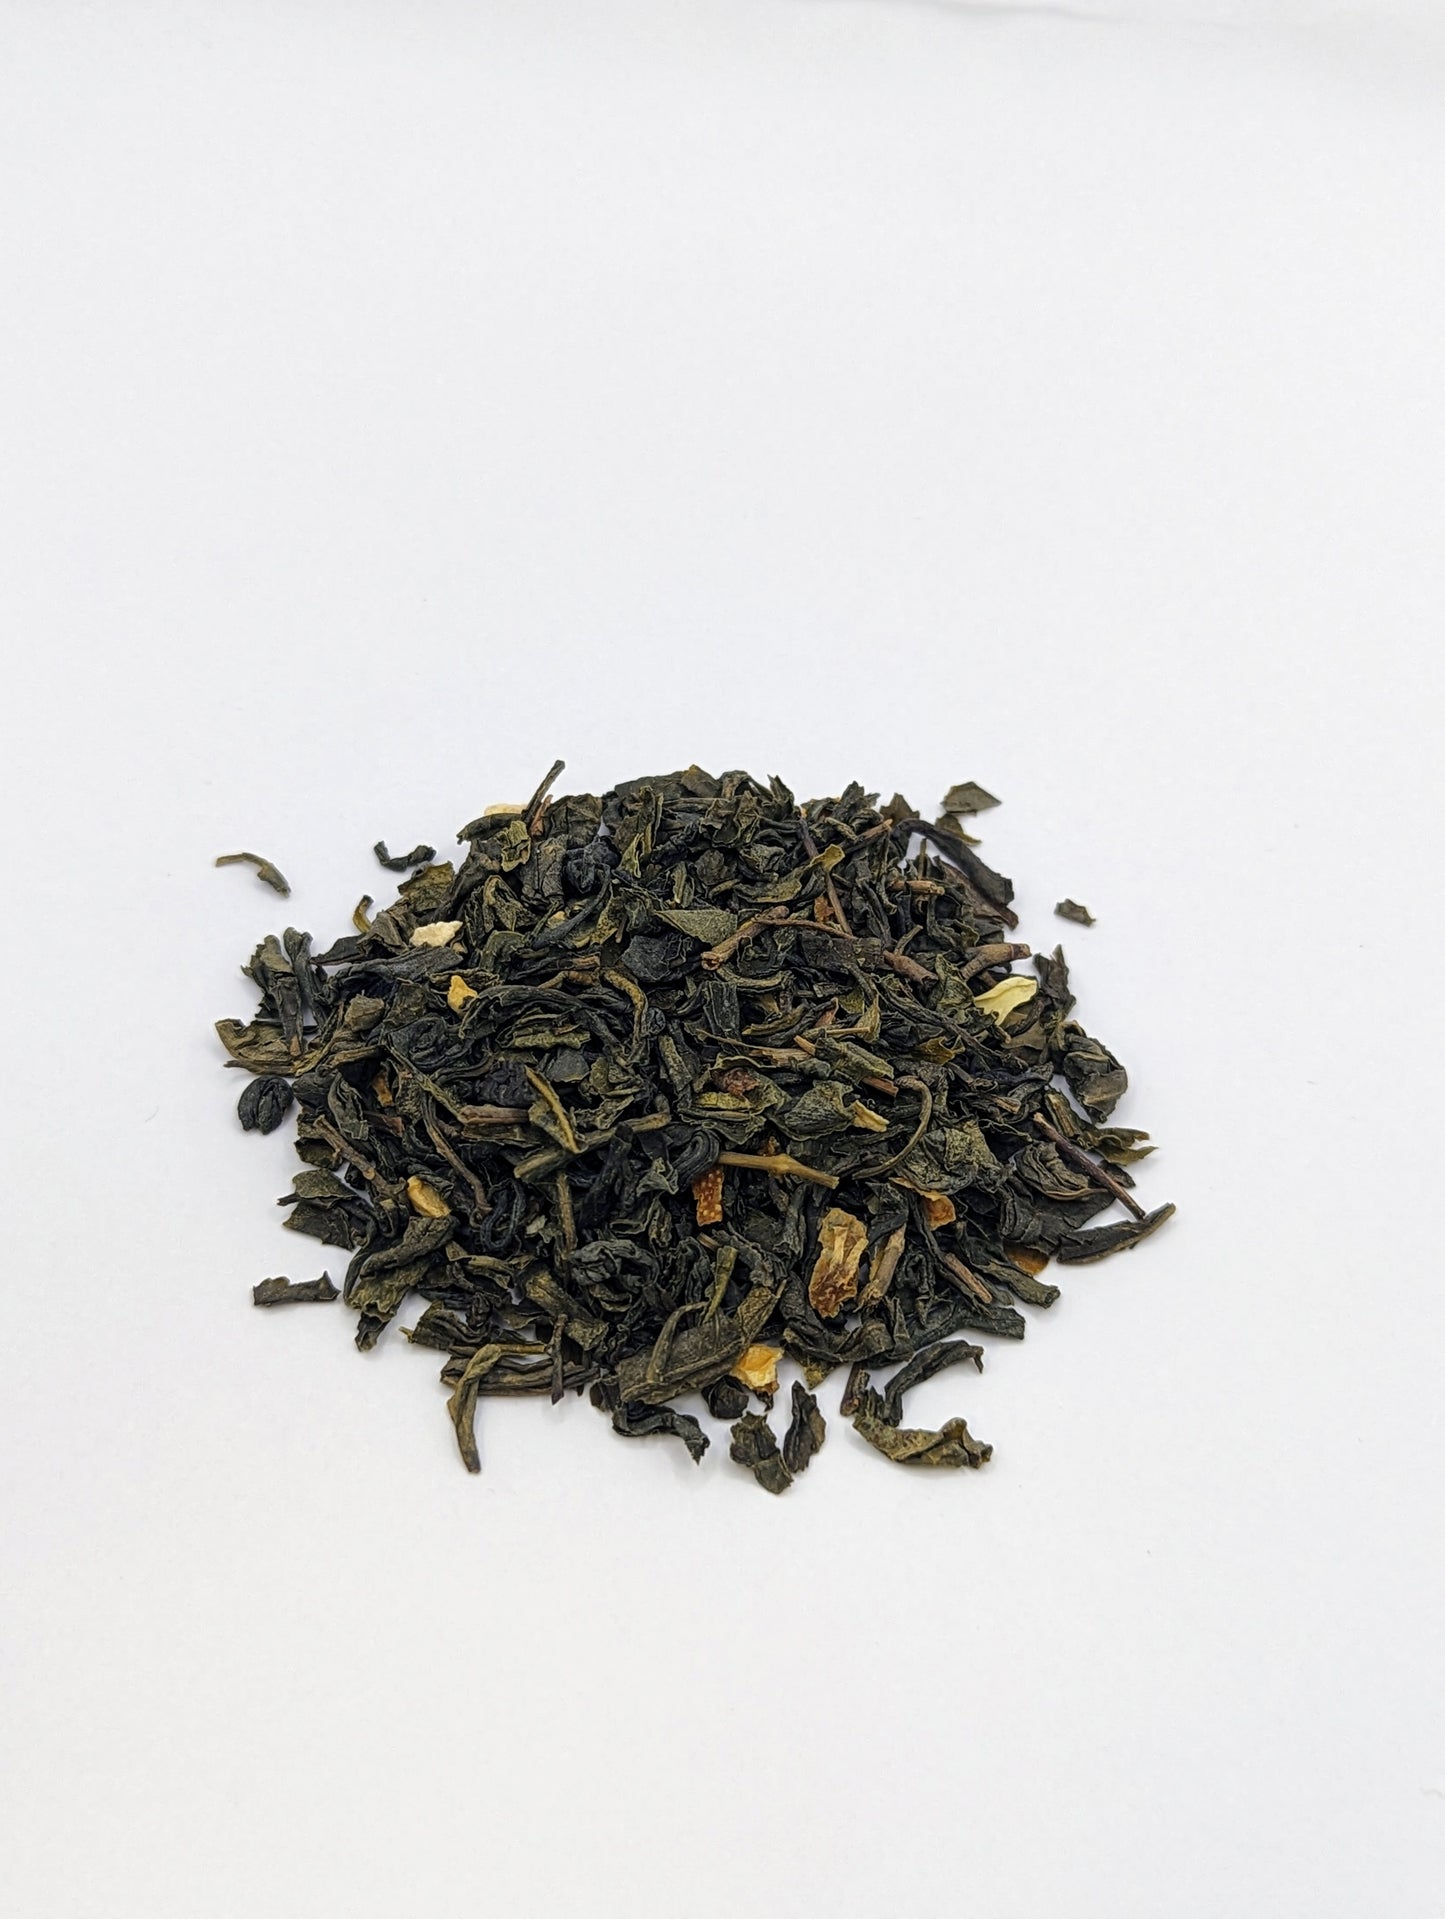 Organic Orange Almond Jasmine Tea